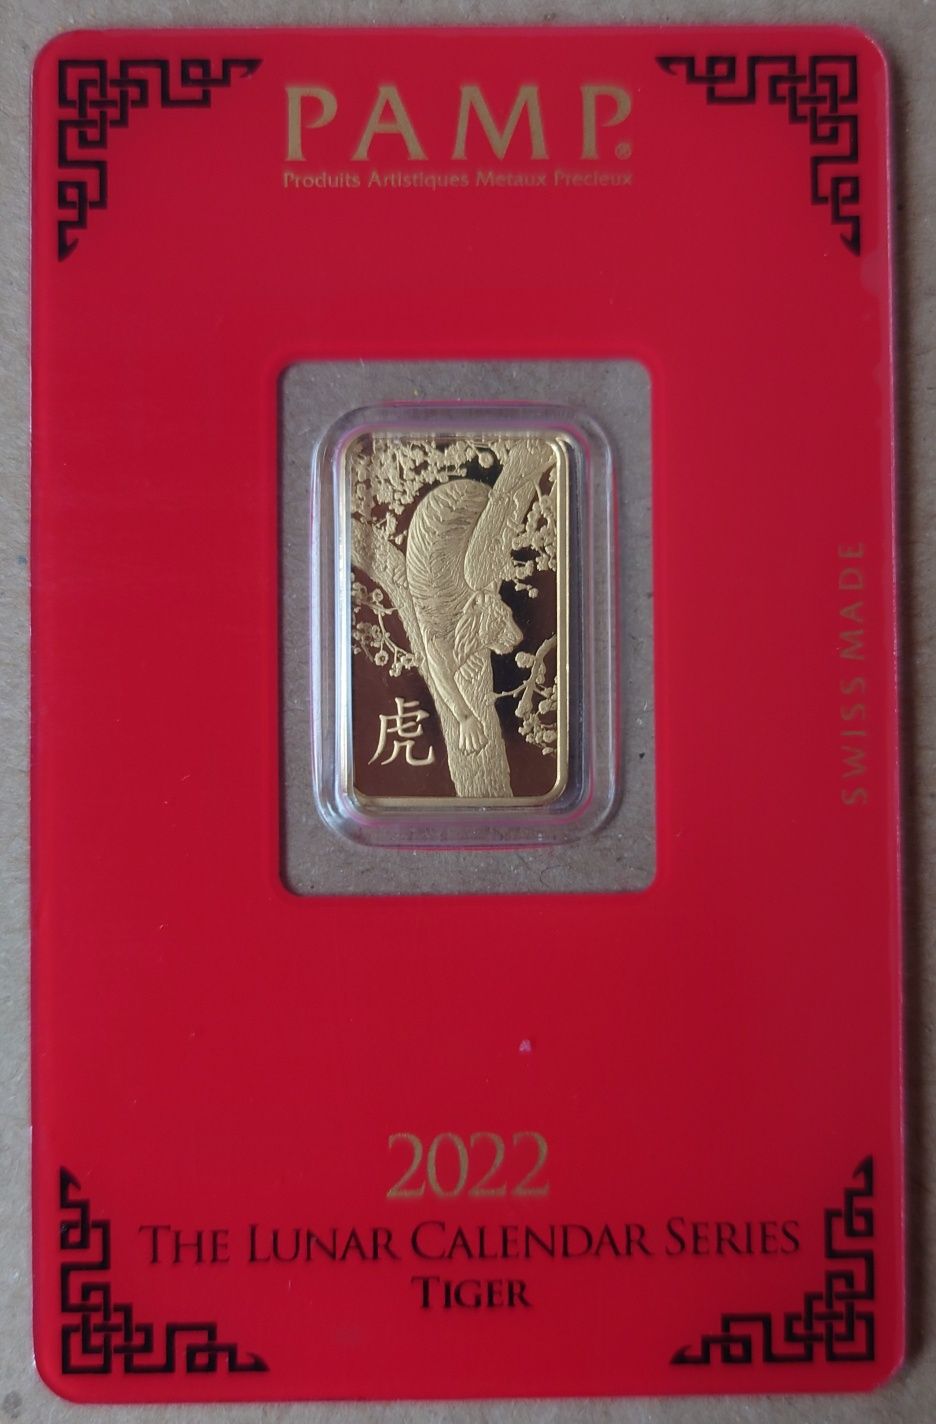 Lingou Pamp lunar pentru colecționari5 grame aur, 2013, 2022, 2023